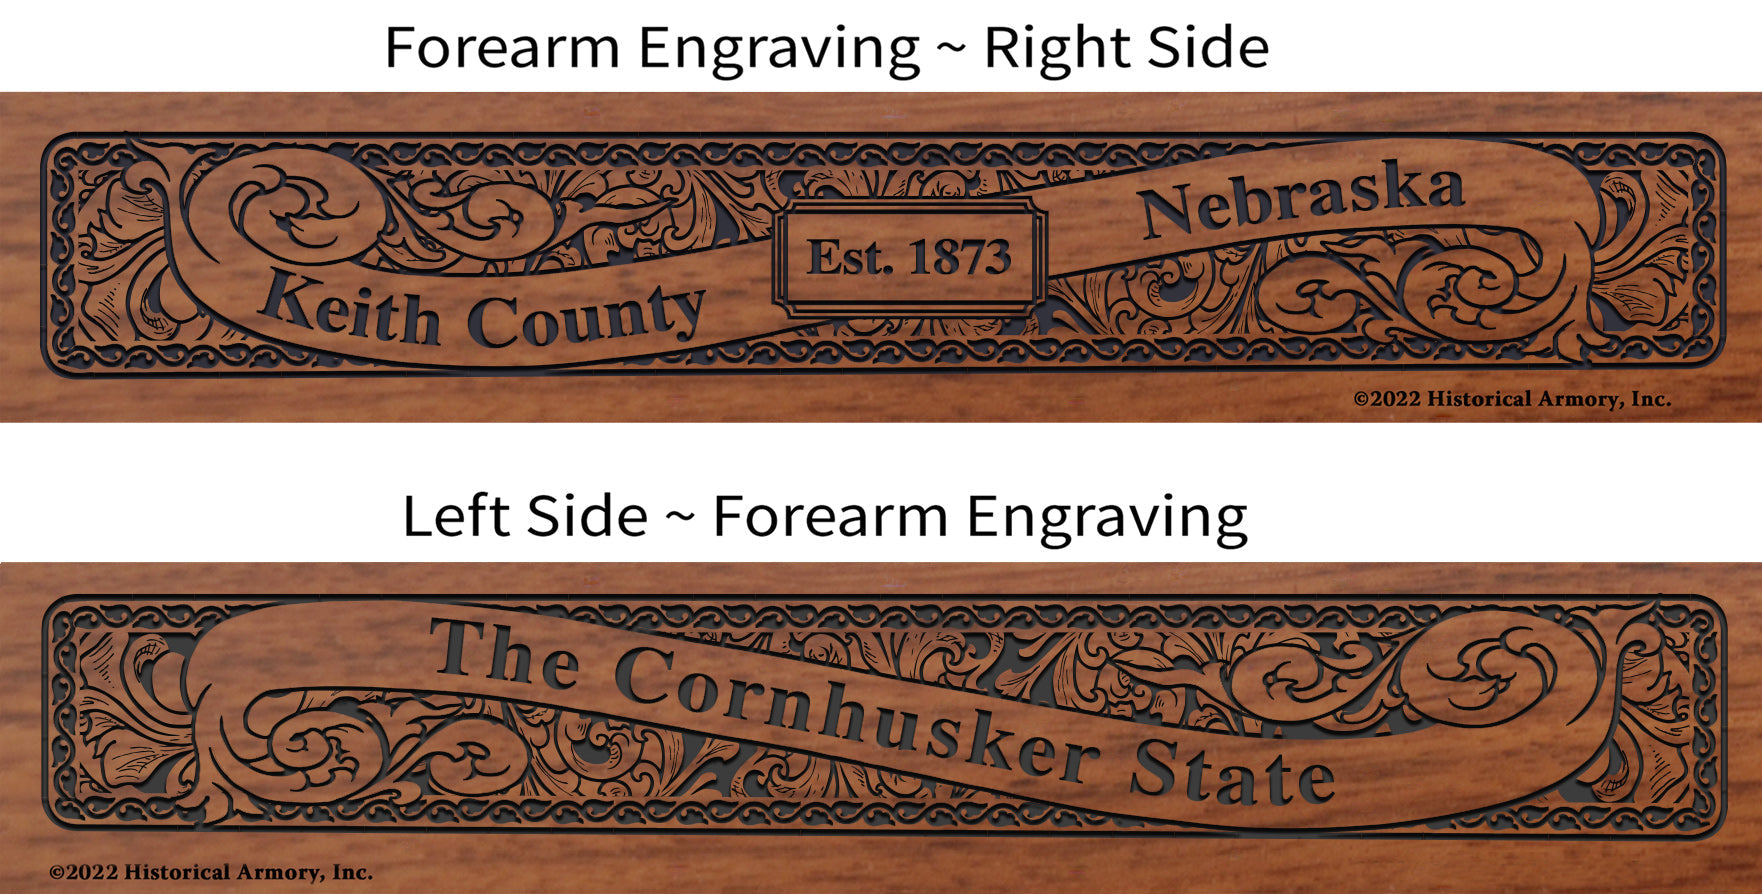 Keith County Nebraska Engraved Rifle Forearm